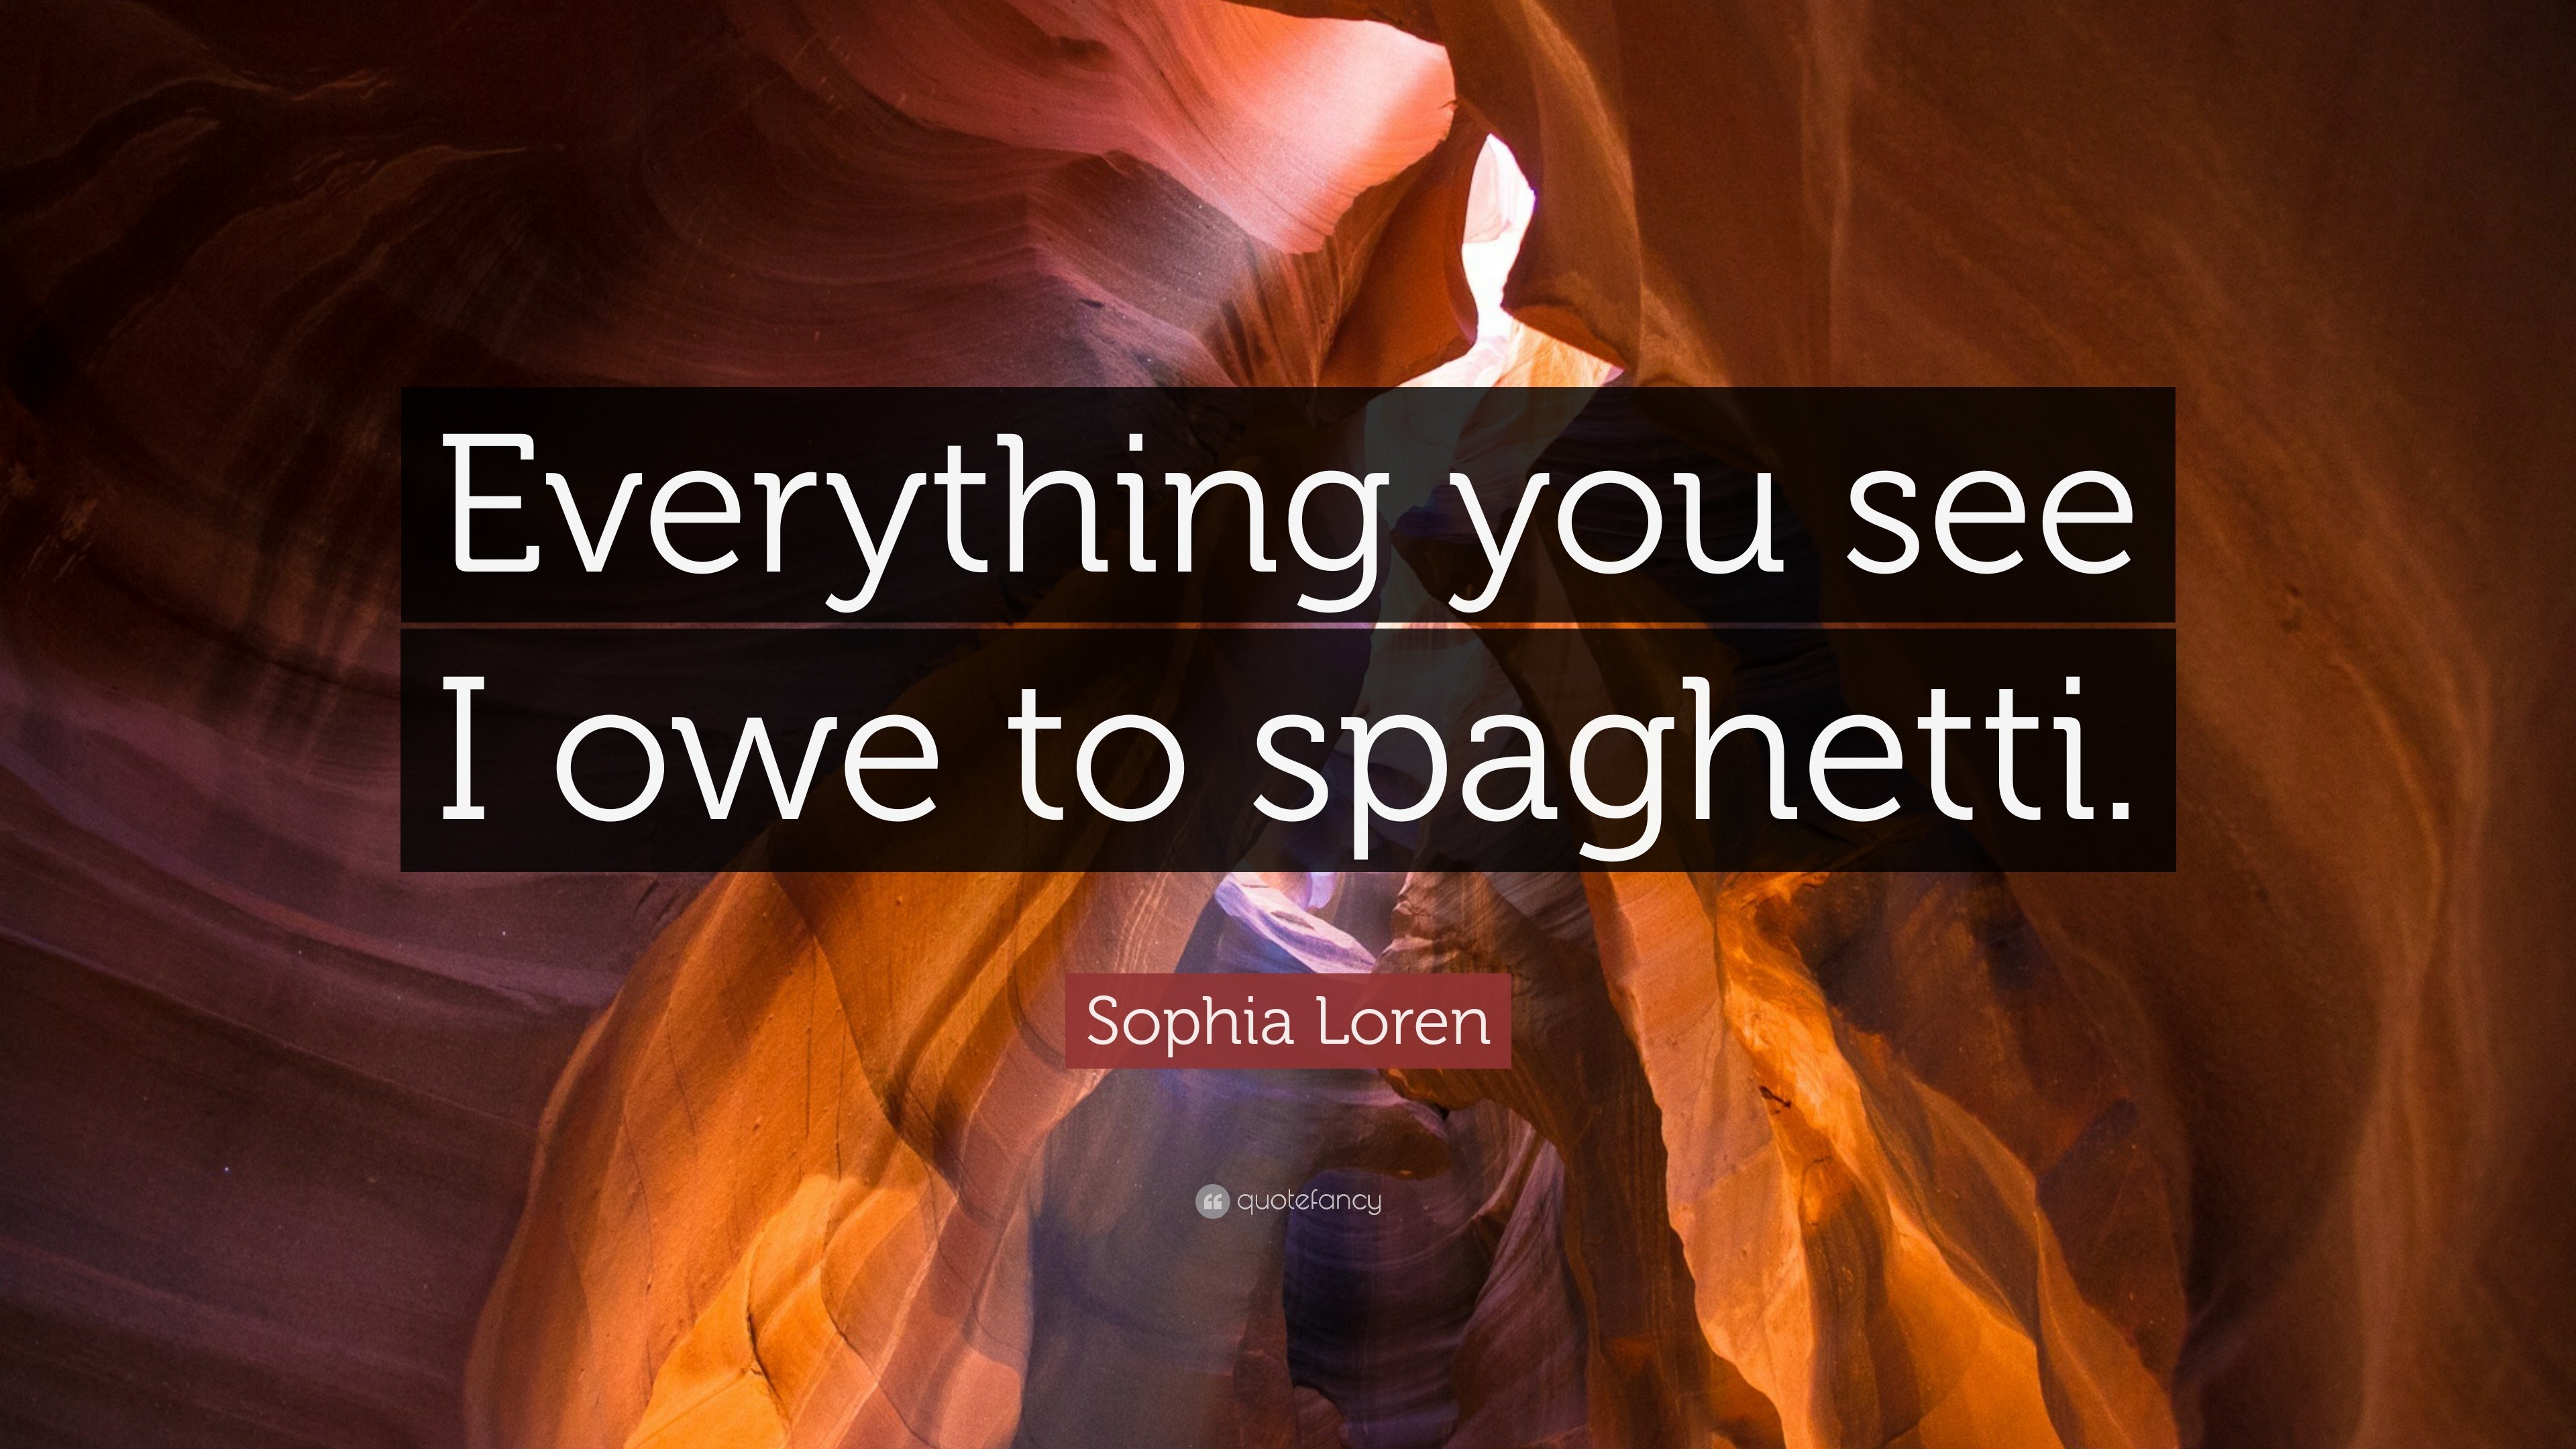 Sophia Loren Quote: “Everything you see I owe to spaghetti.”